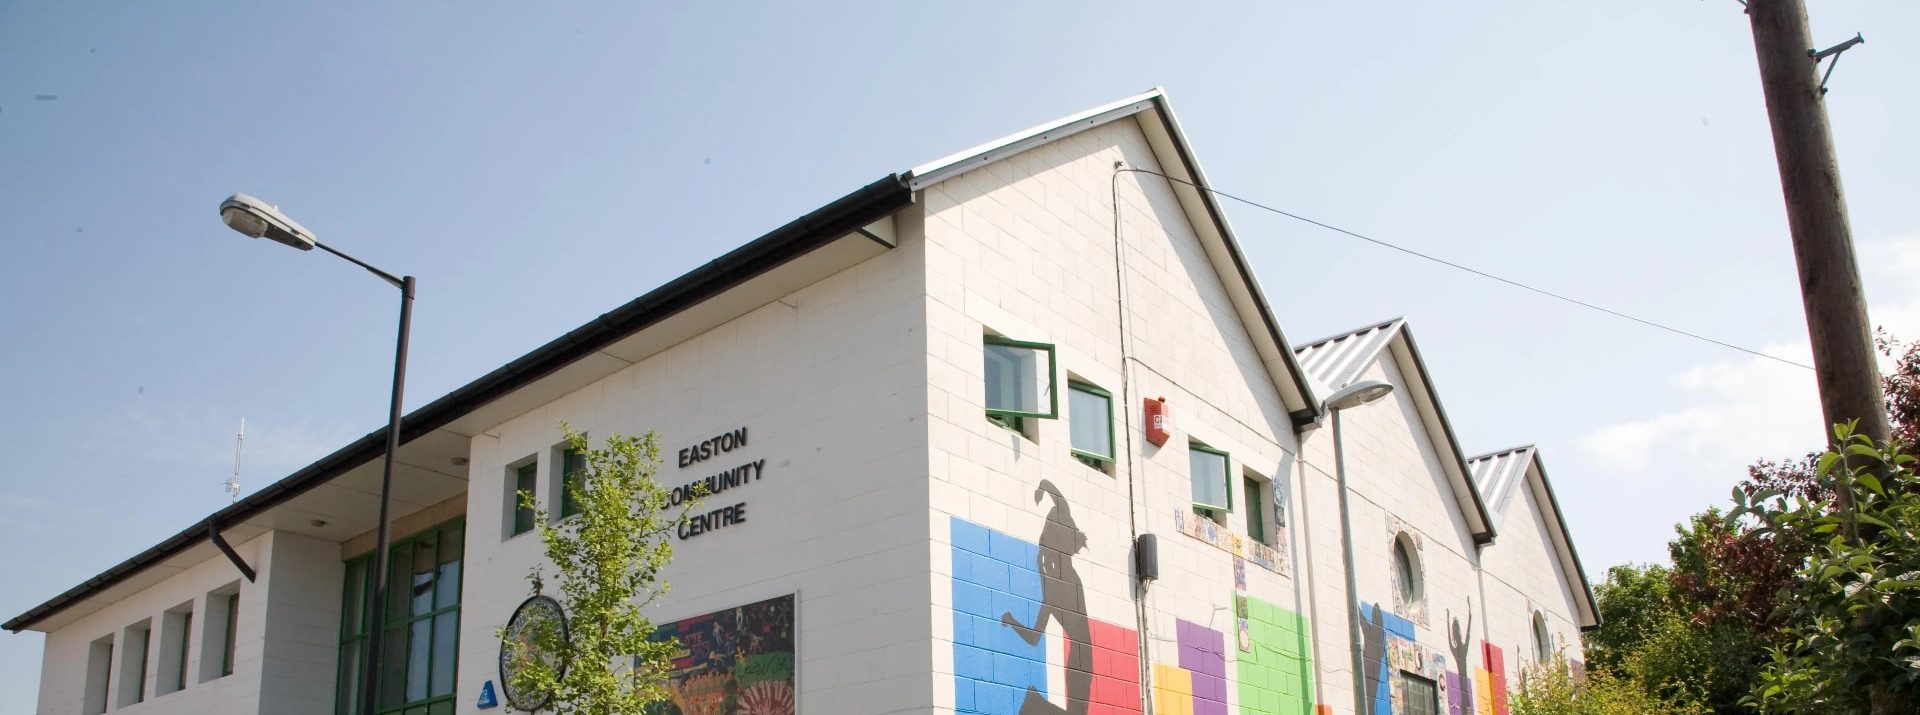 Picture of Easton Community Centre - Bristol Community Acupuncture